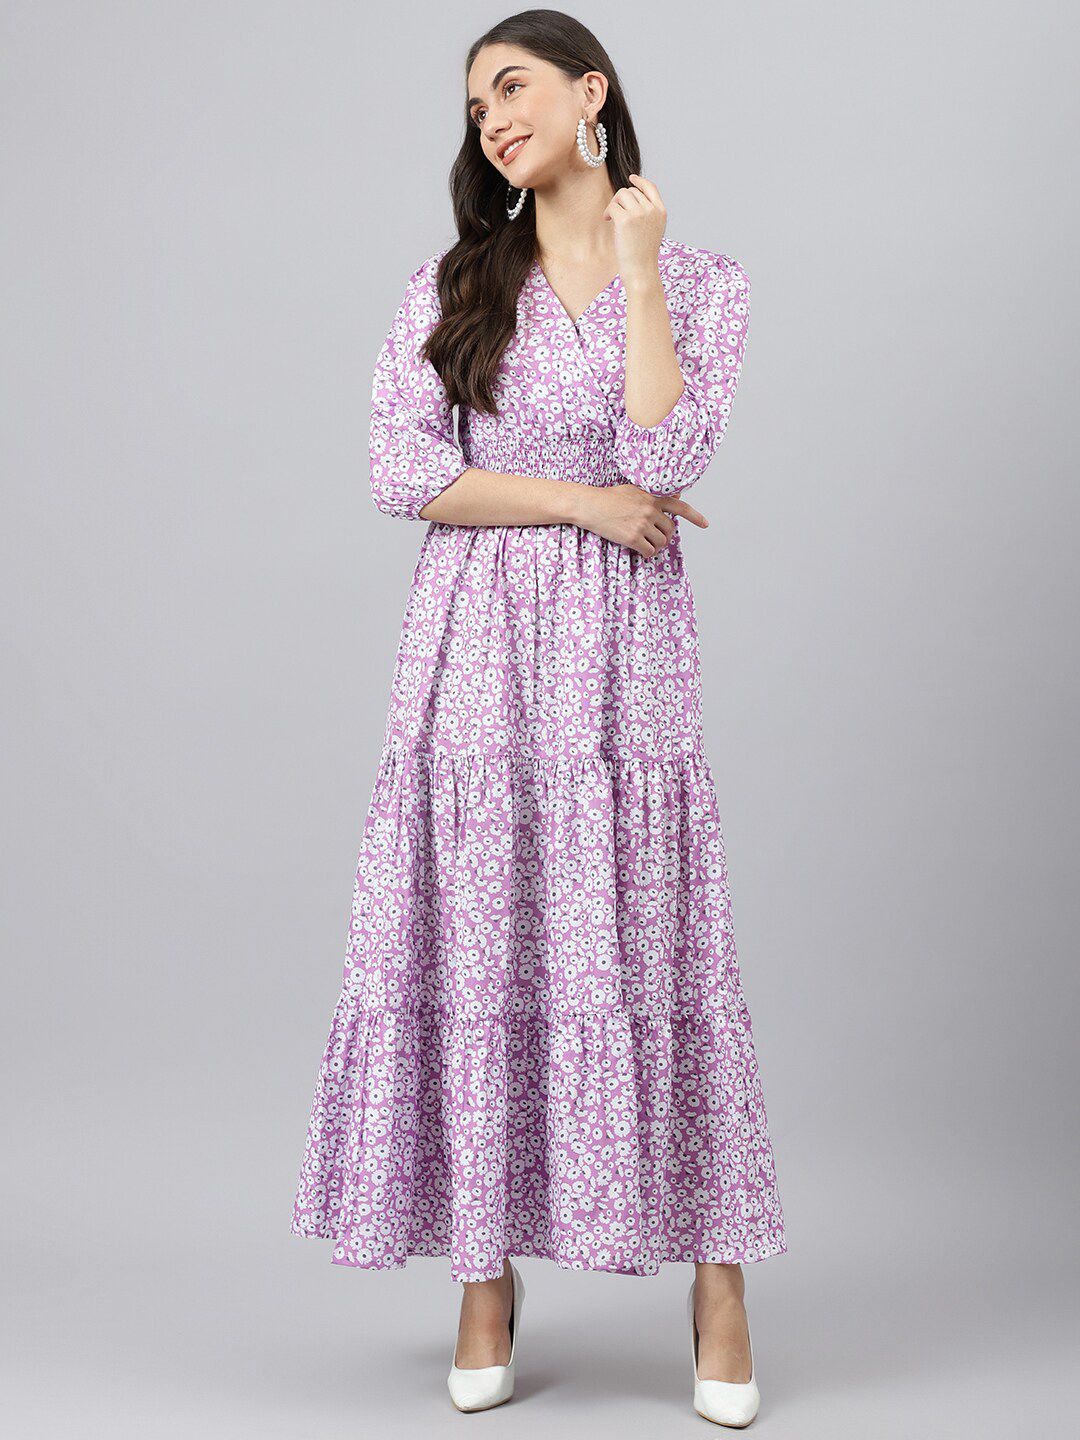 DEEBACO Women's Lavender Layered Maxi Dress Price in India